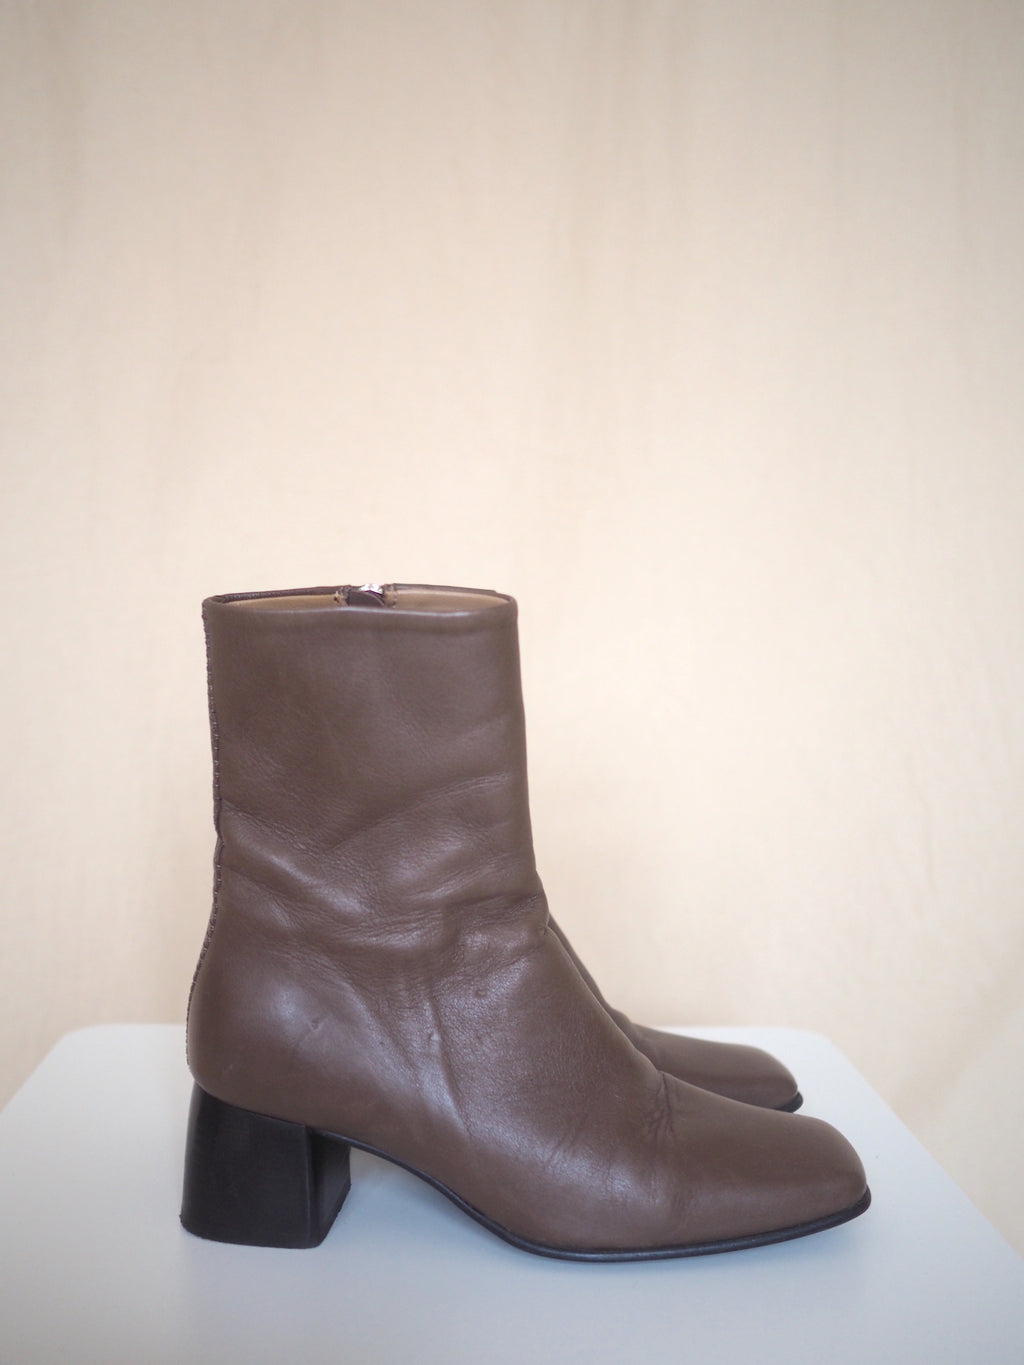 Filippa K. Leather Boots